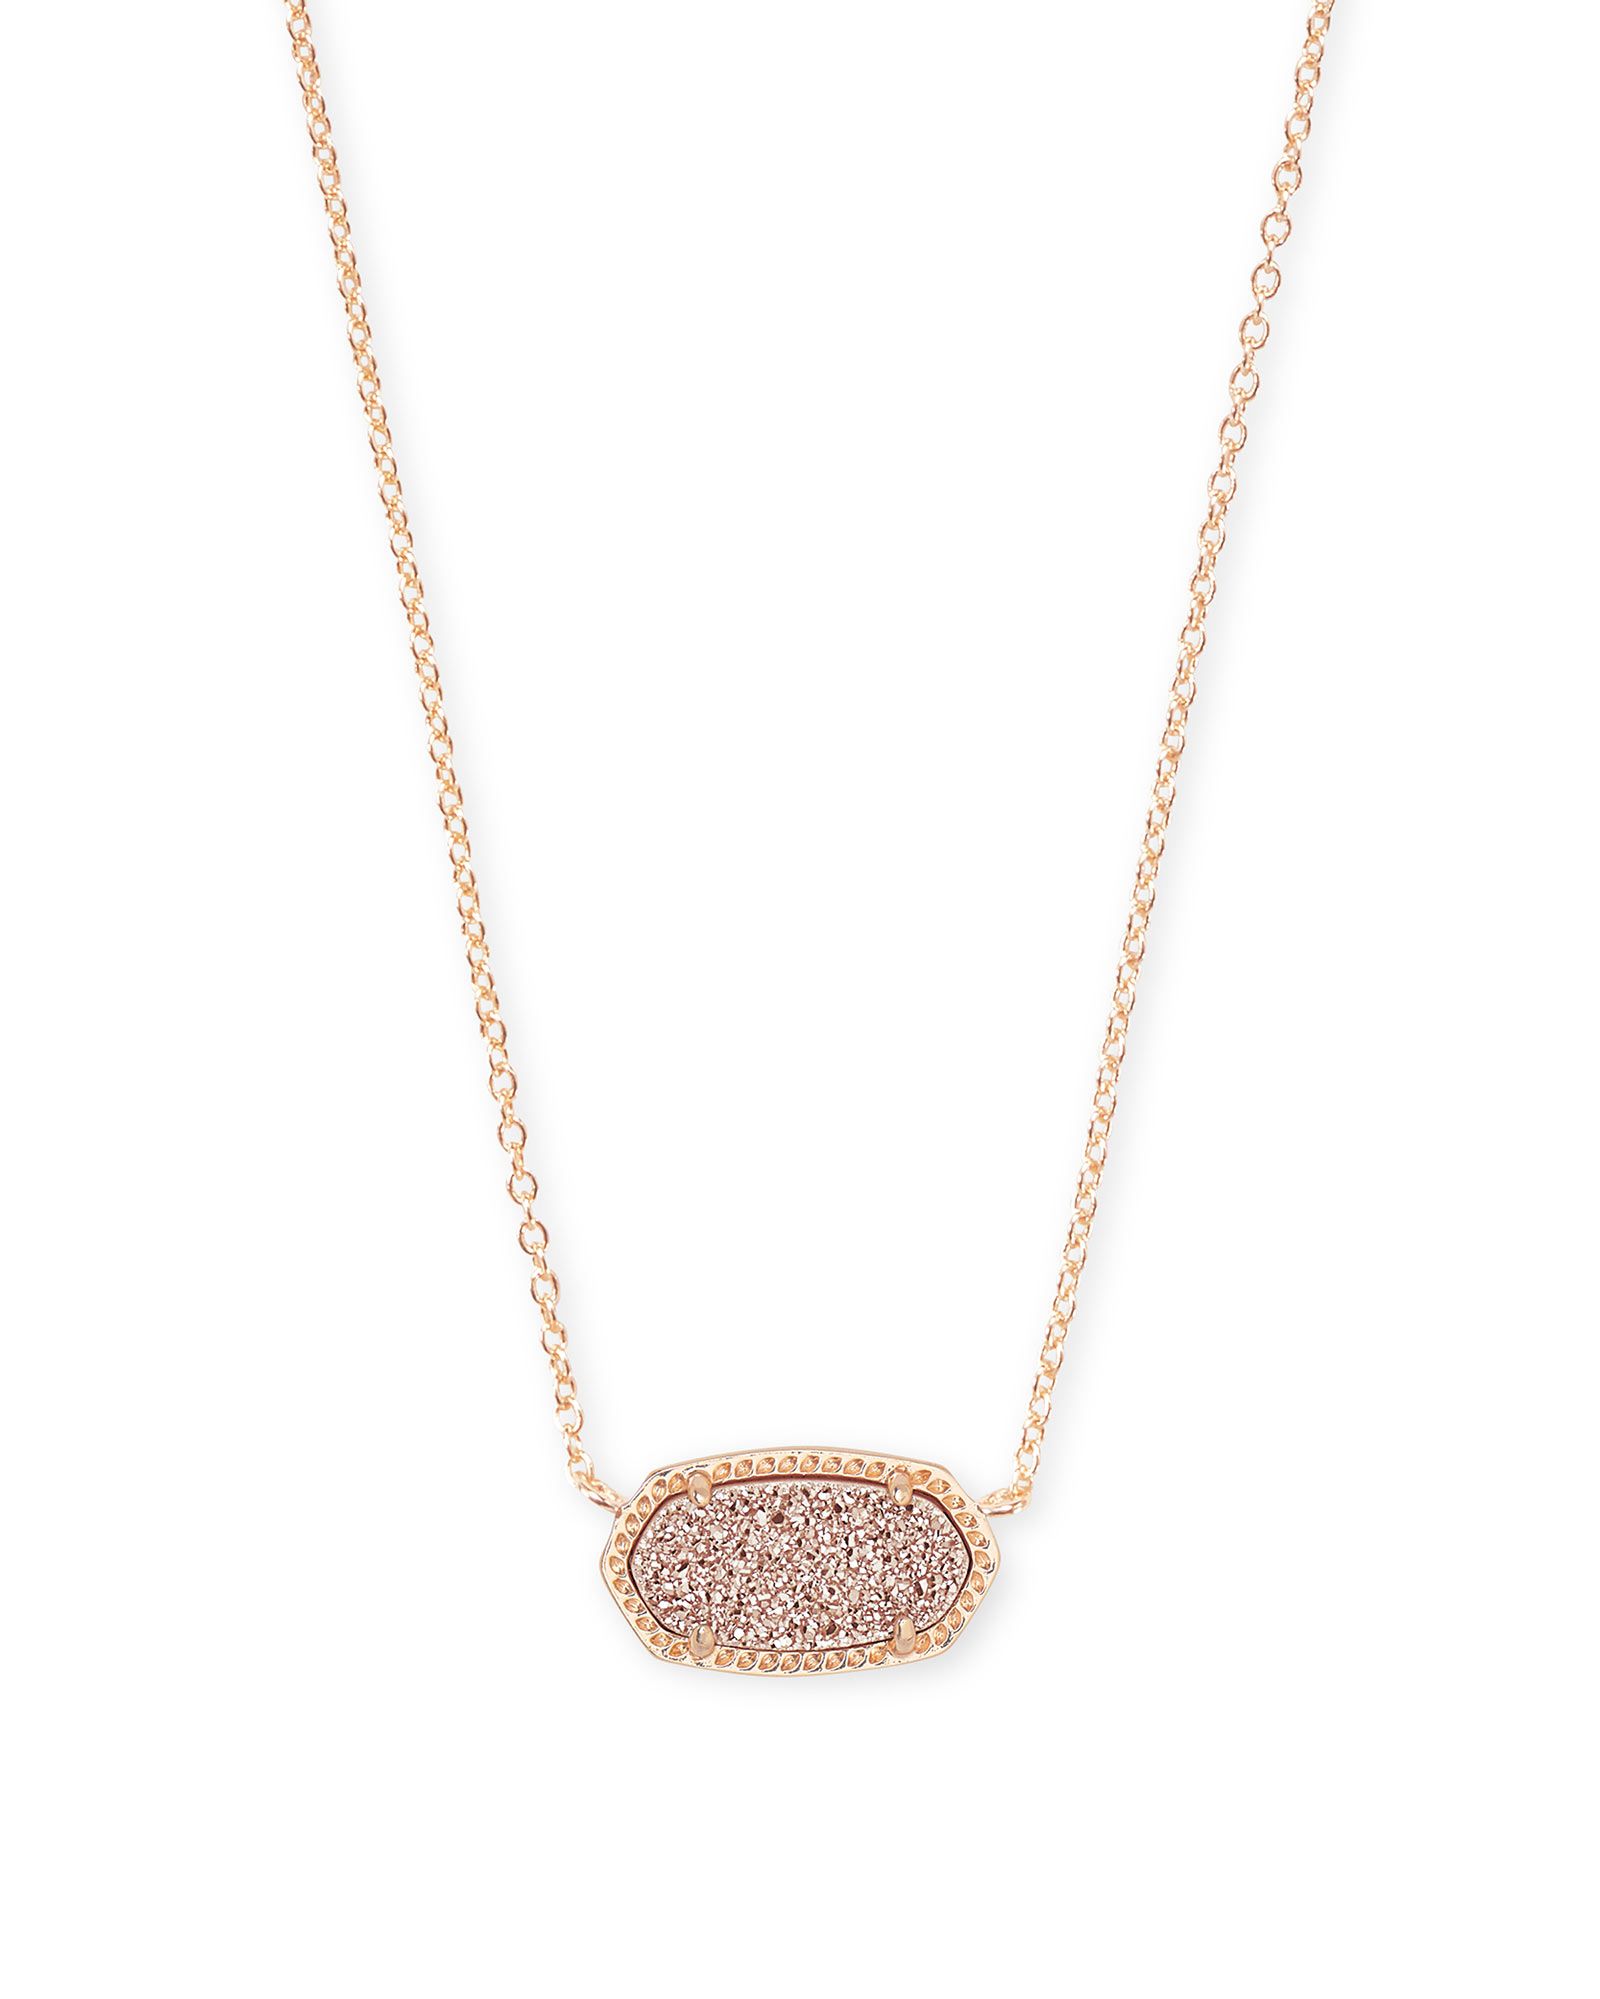 Elisa Rose Gold Pendant Necklace in Sand Drusy | Kendra Scott | Kendra Scott